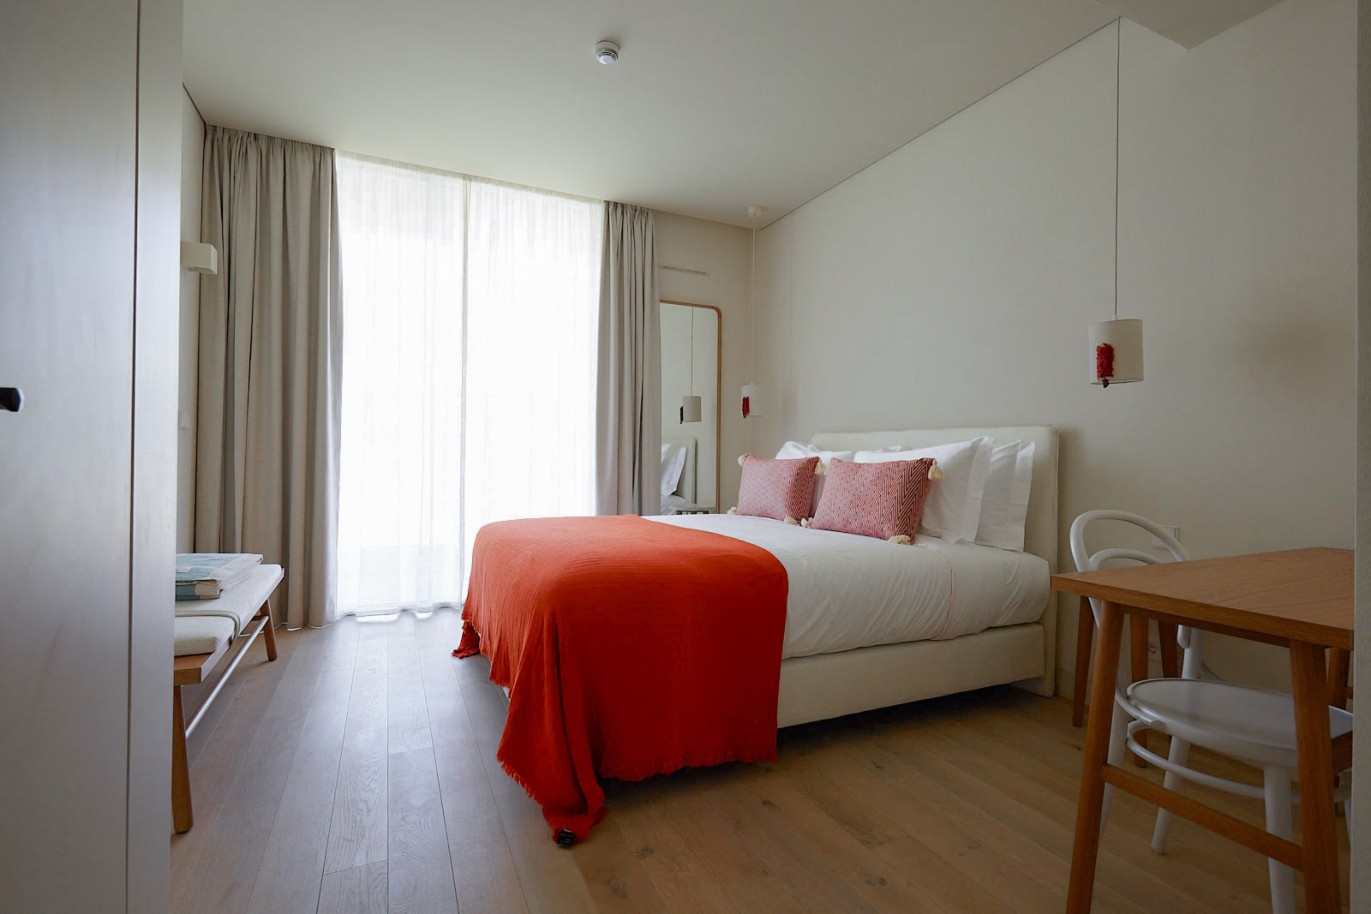 2 bedroom apartment in resort, for sale in Porches, Algarve_229204